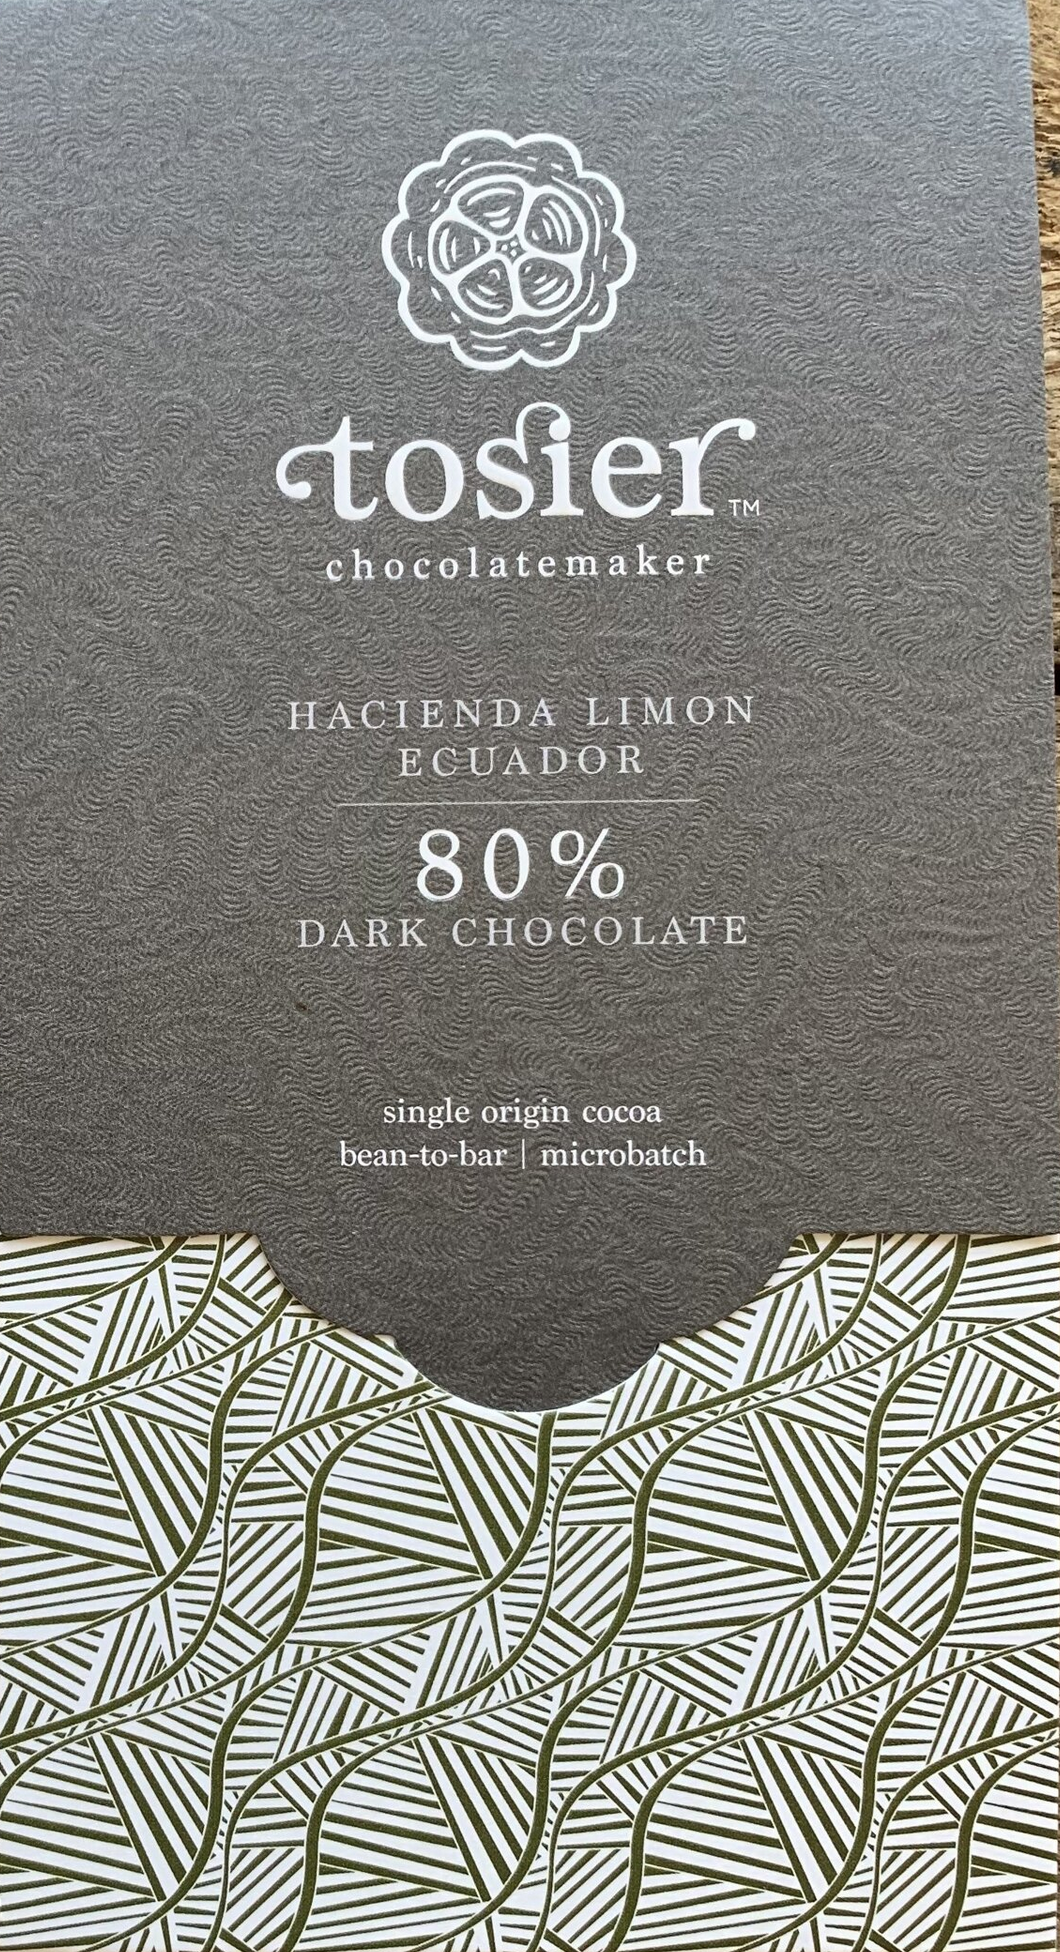 TOSIER | Dunkle Schokolade »Hacienda Limon Ecuador« 80% | 60g